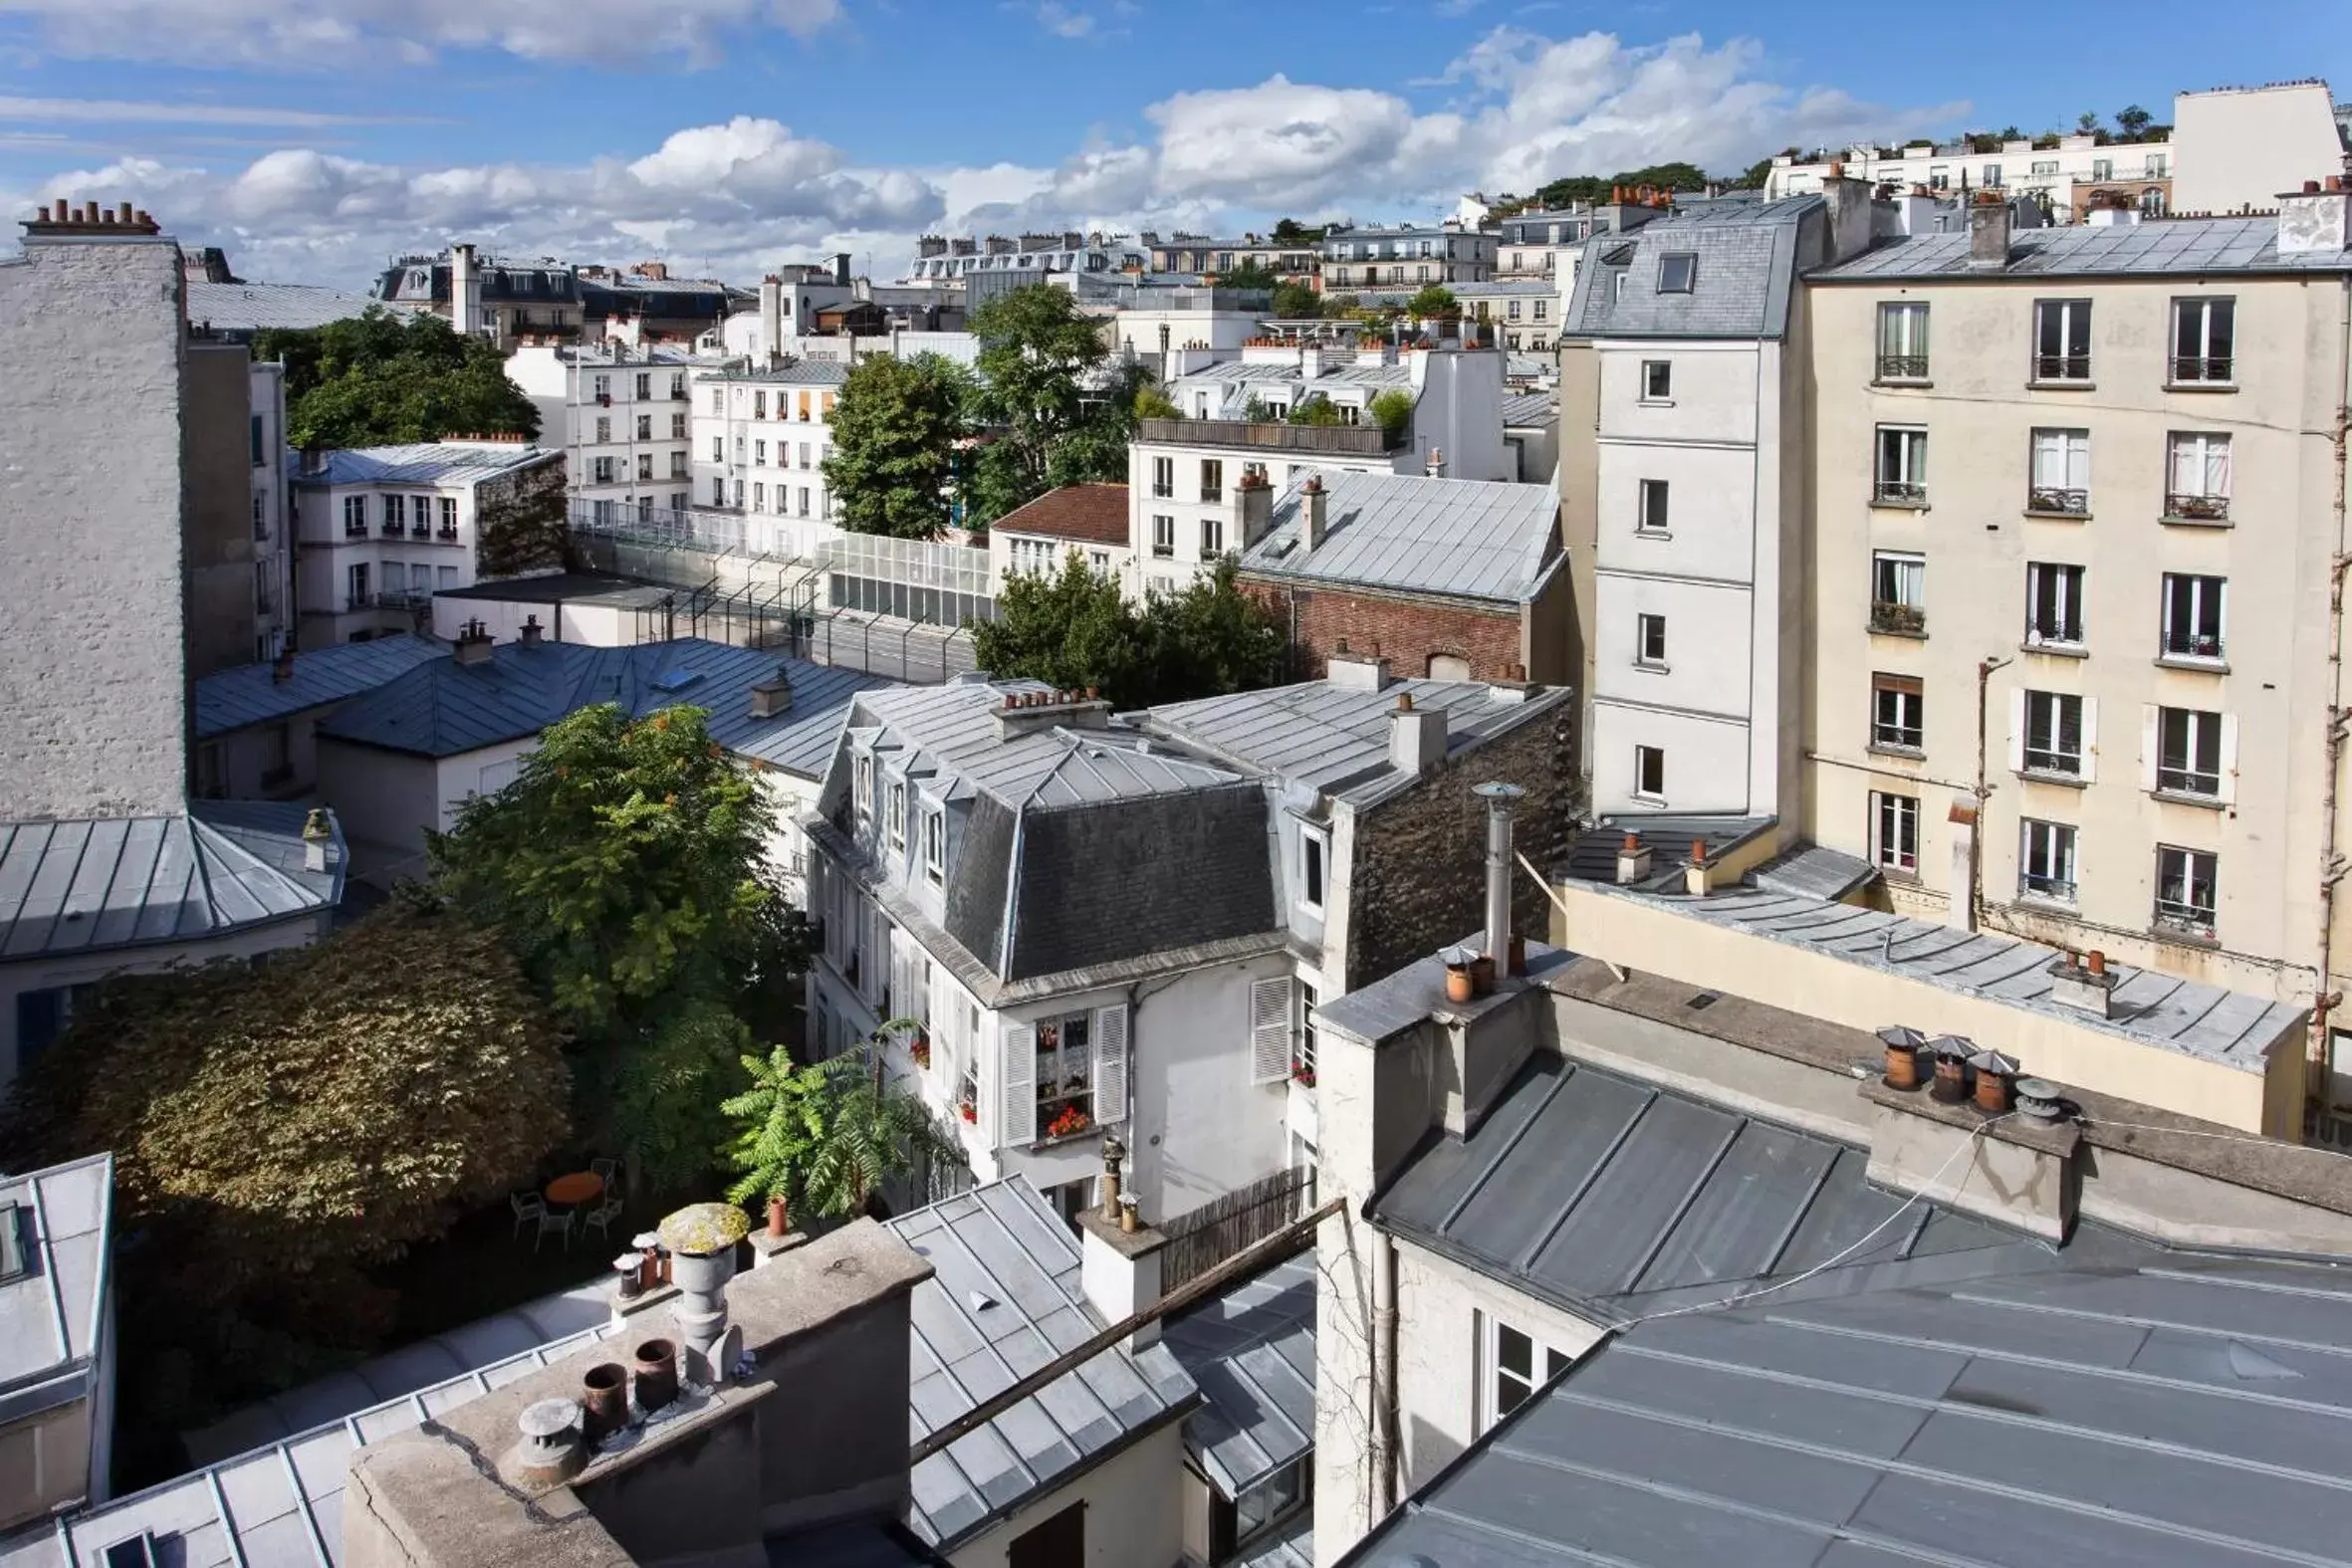 Area and facilities in Hôtel des Arts Montmartre